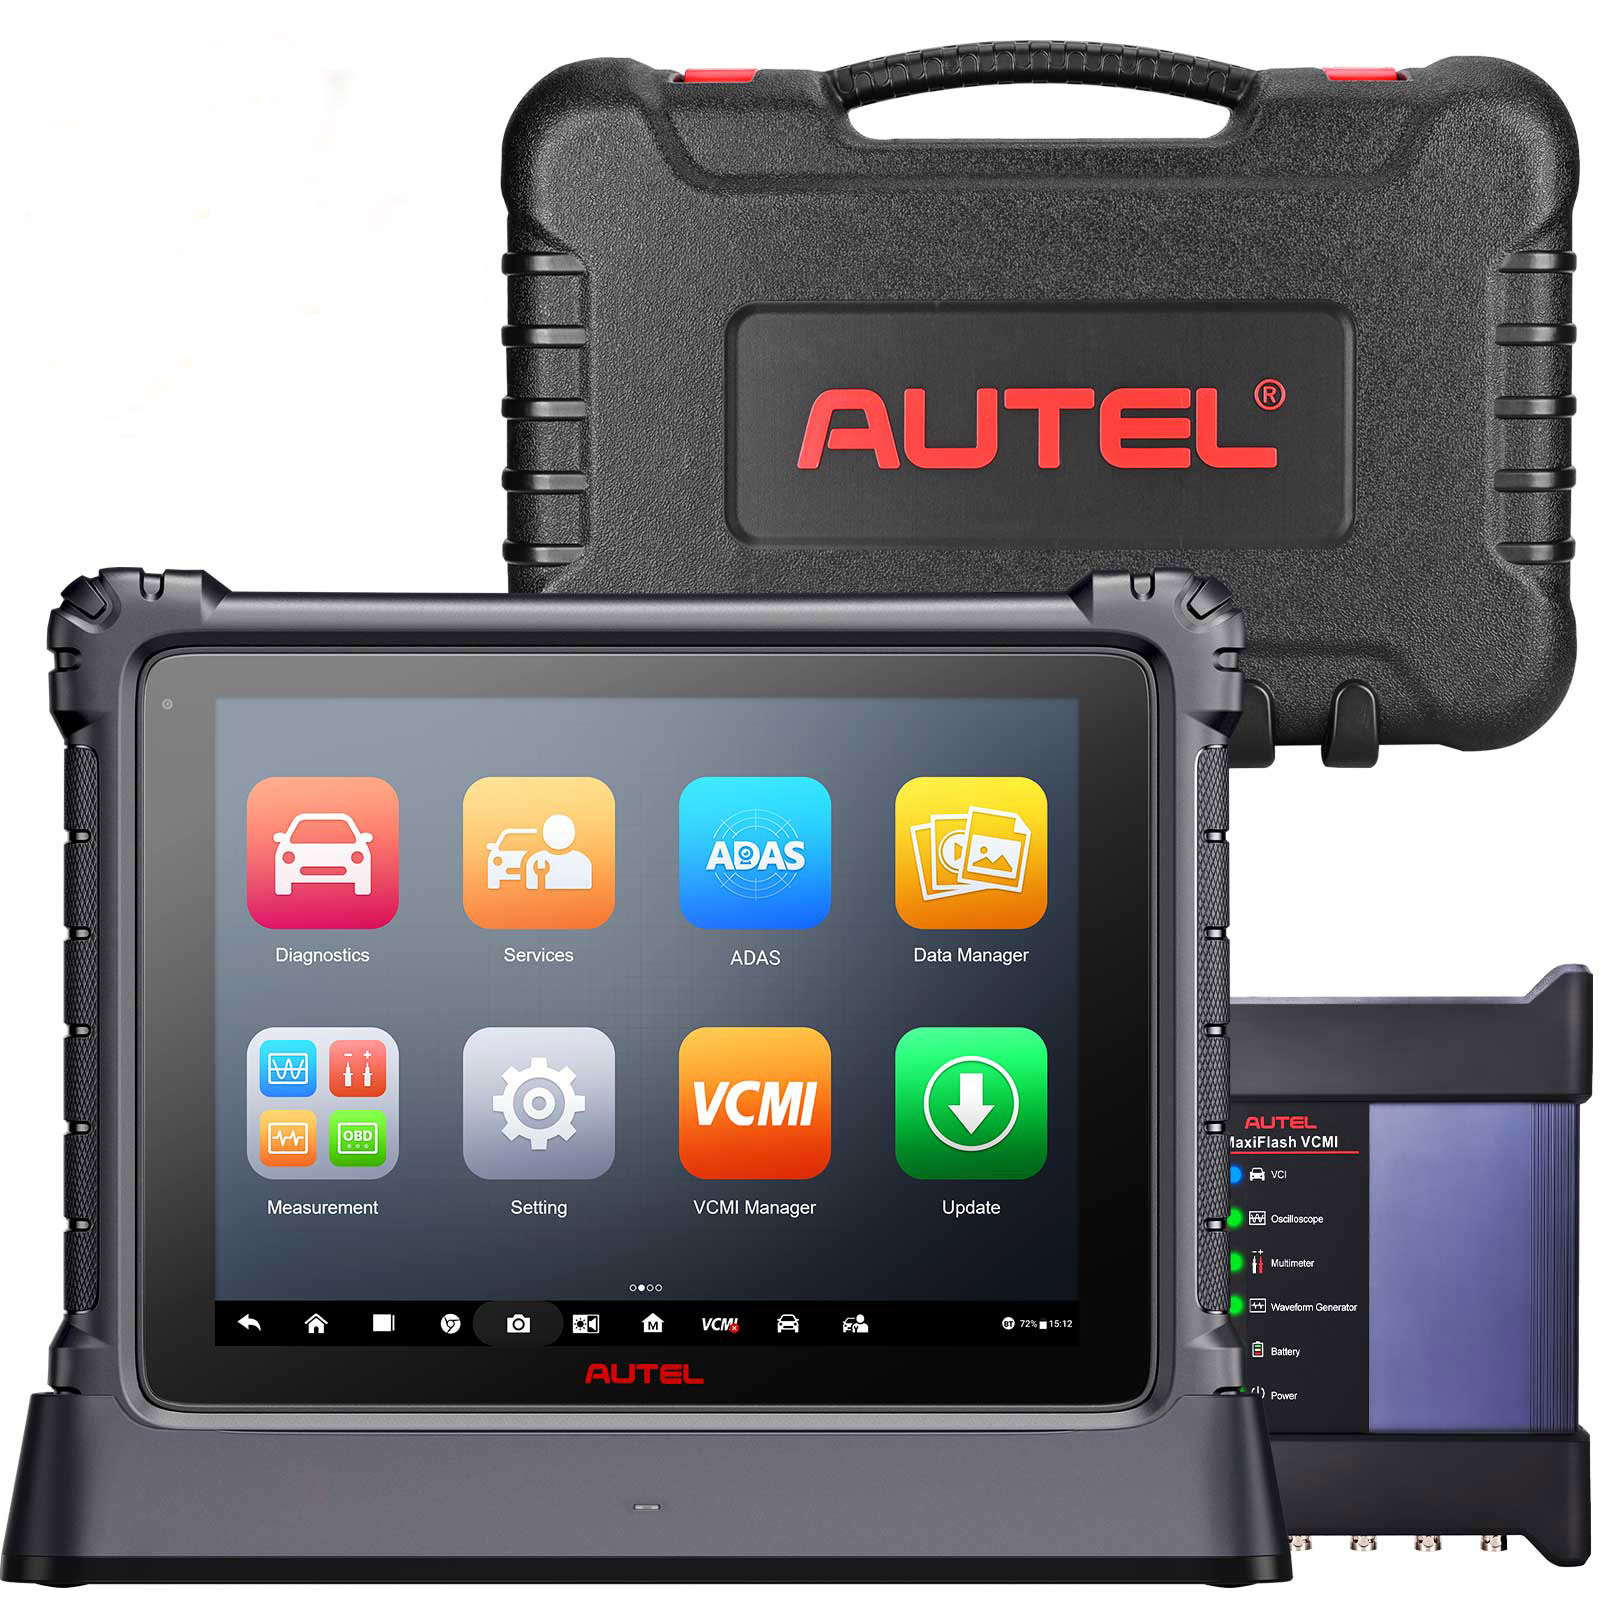 Auto Diagnostic Tool Autel Maxisys Ultra – Autel Dealer